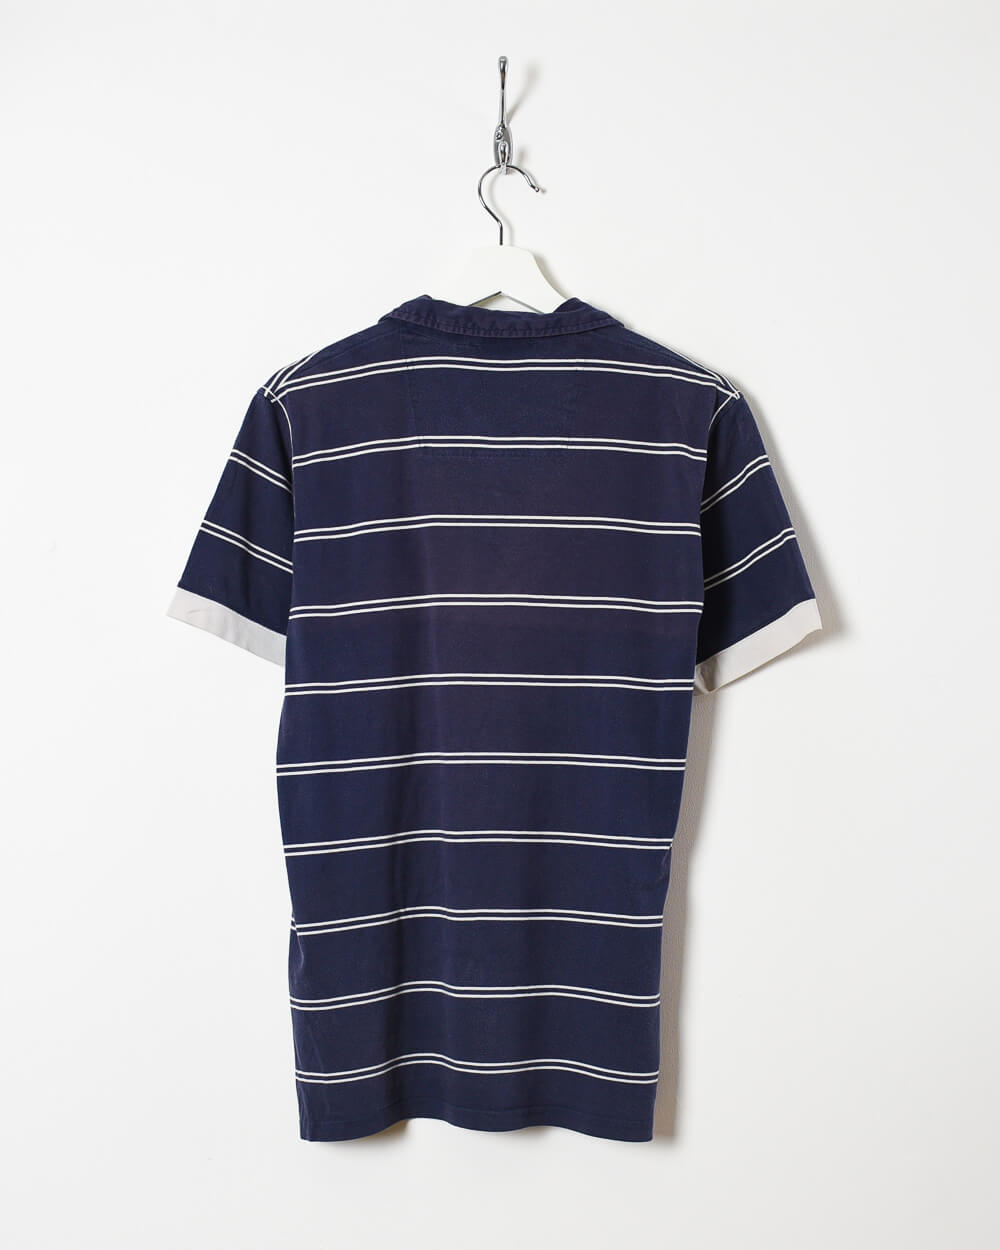 Navy Yves Saint Laurent Polo Shirt - Small